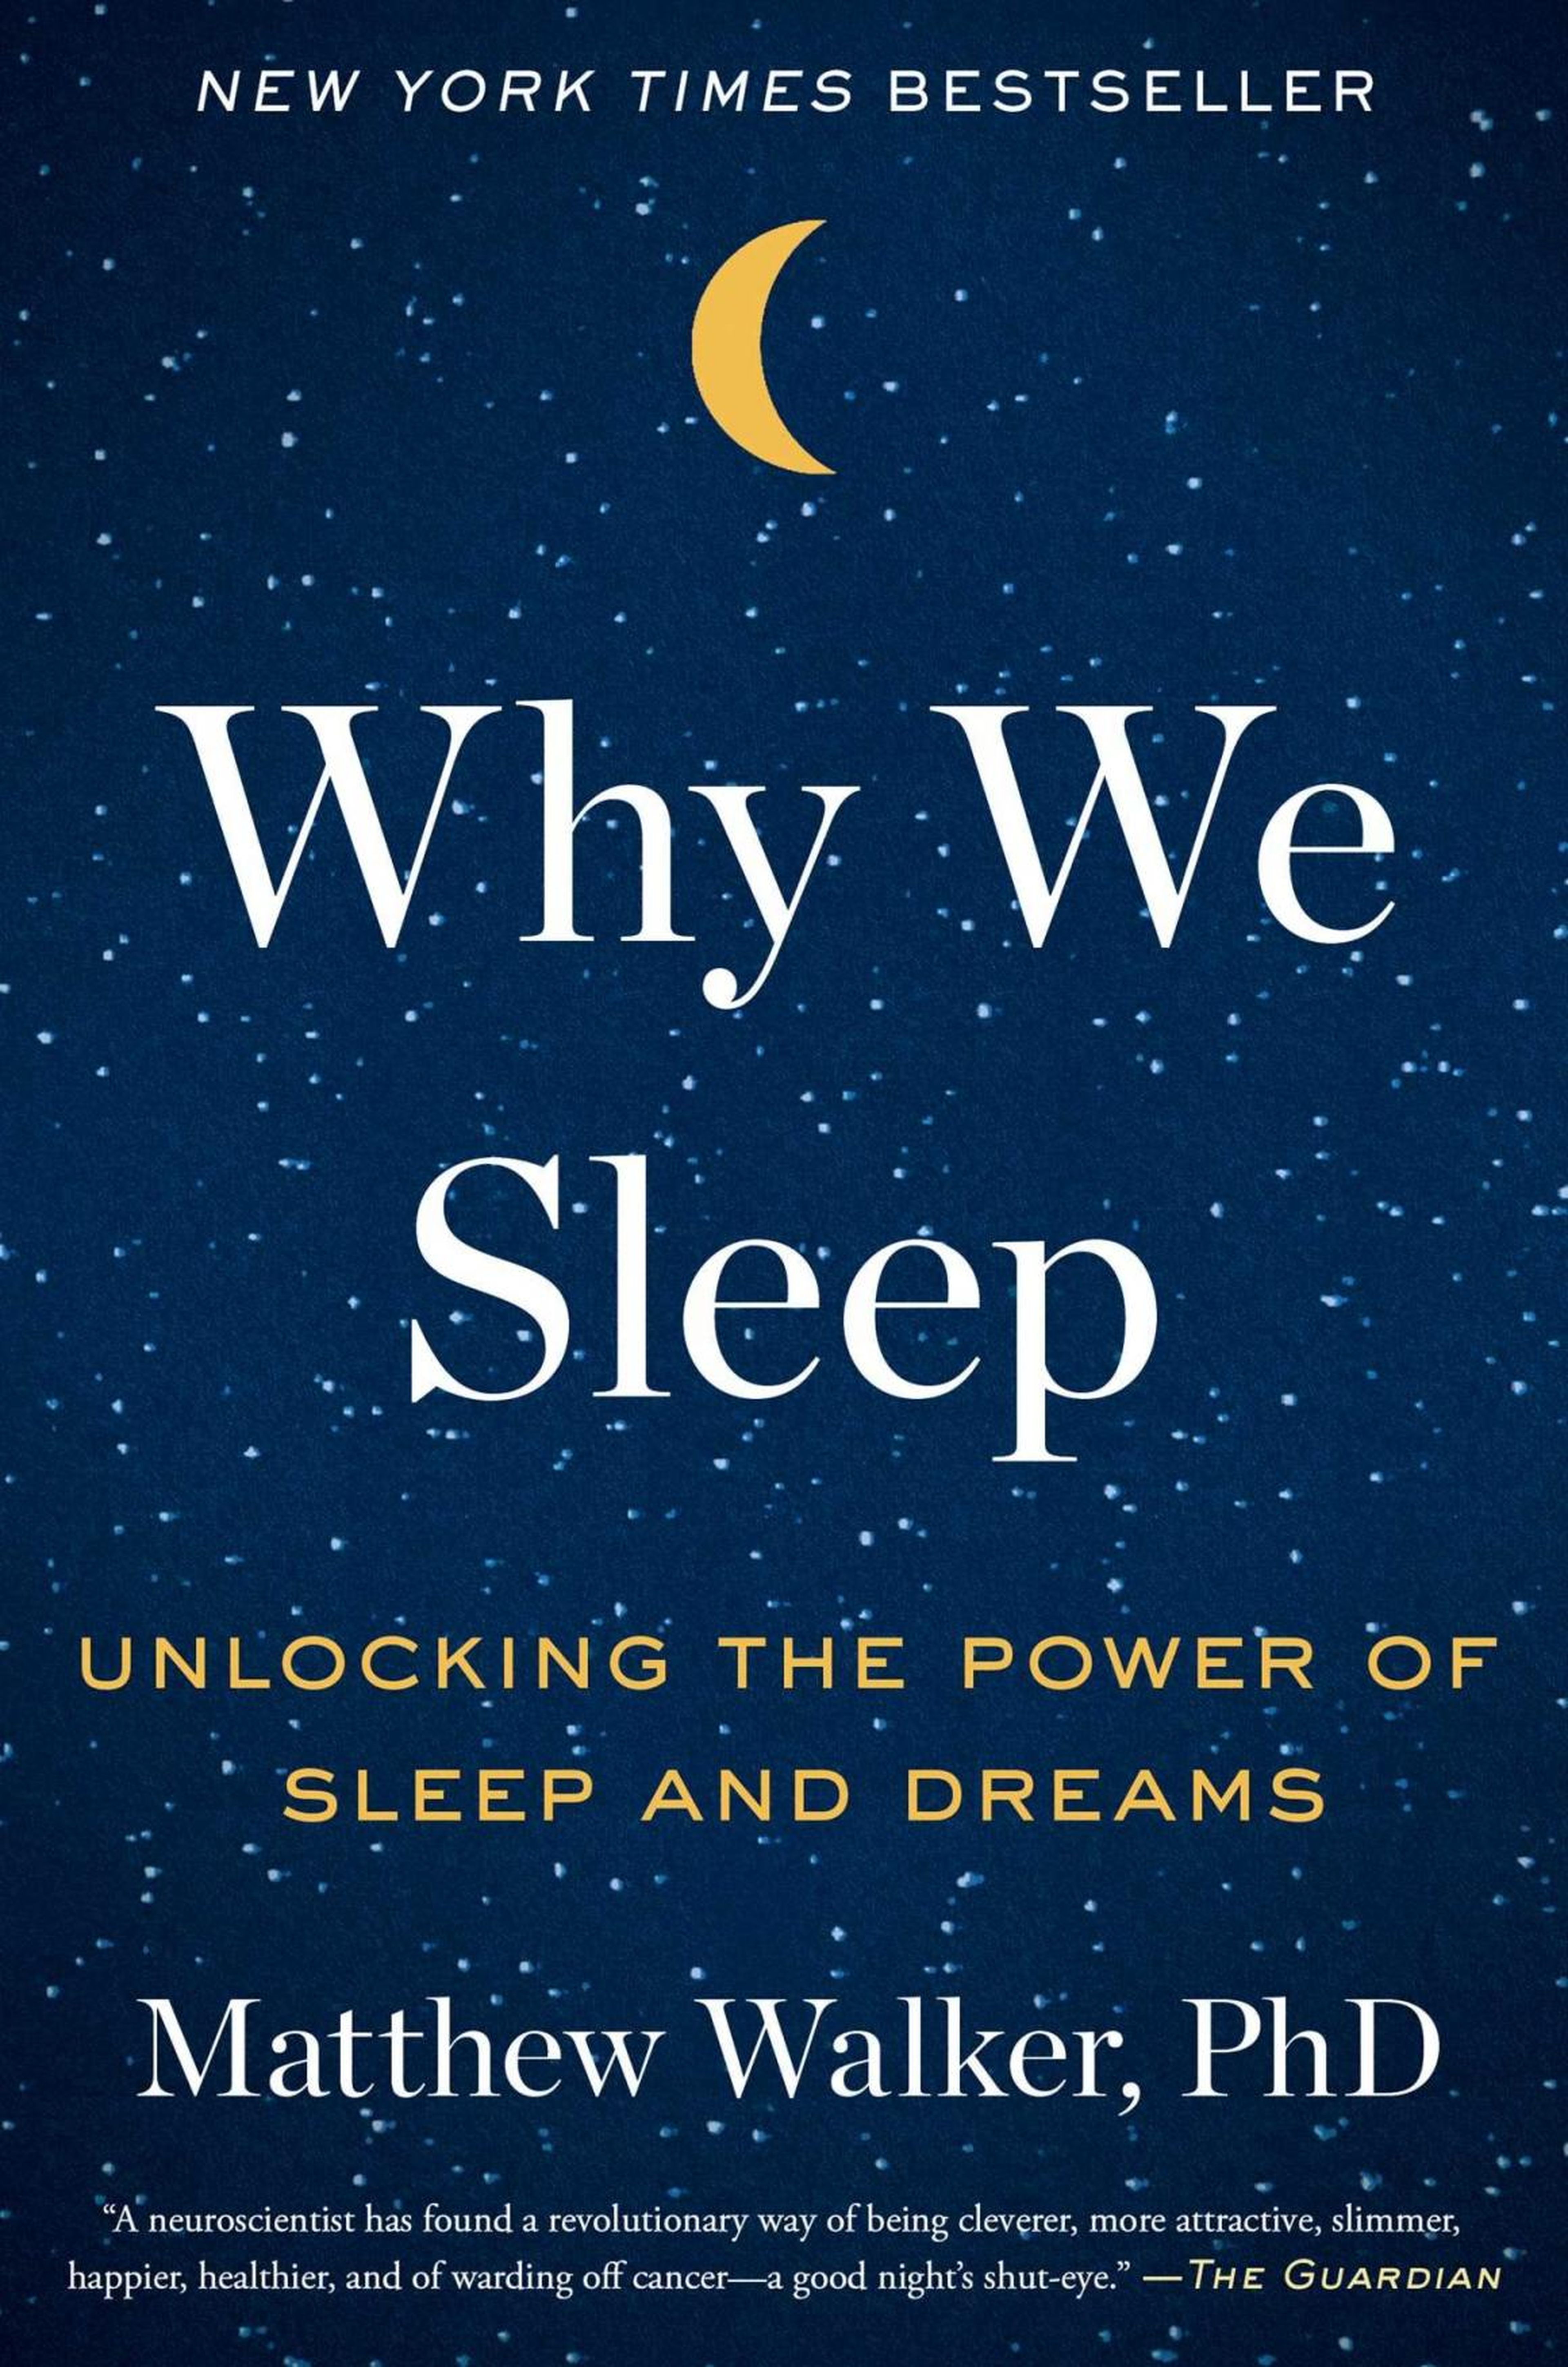 "Why We Sleep: Unlocking the Power of Sleep and Dreams" by Matthew Walker